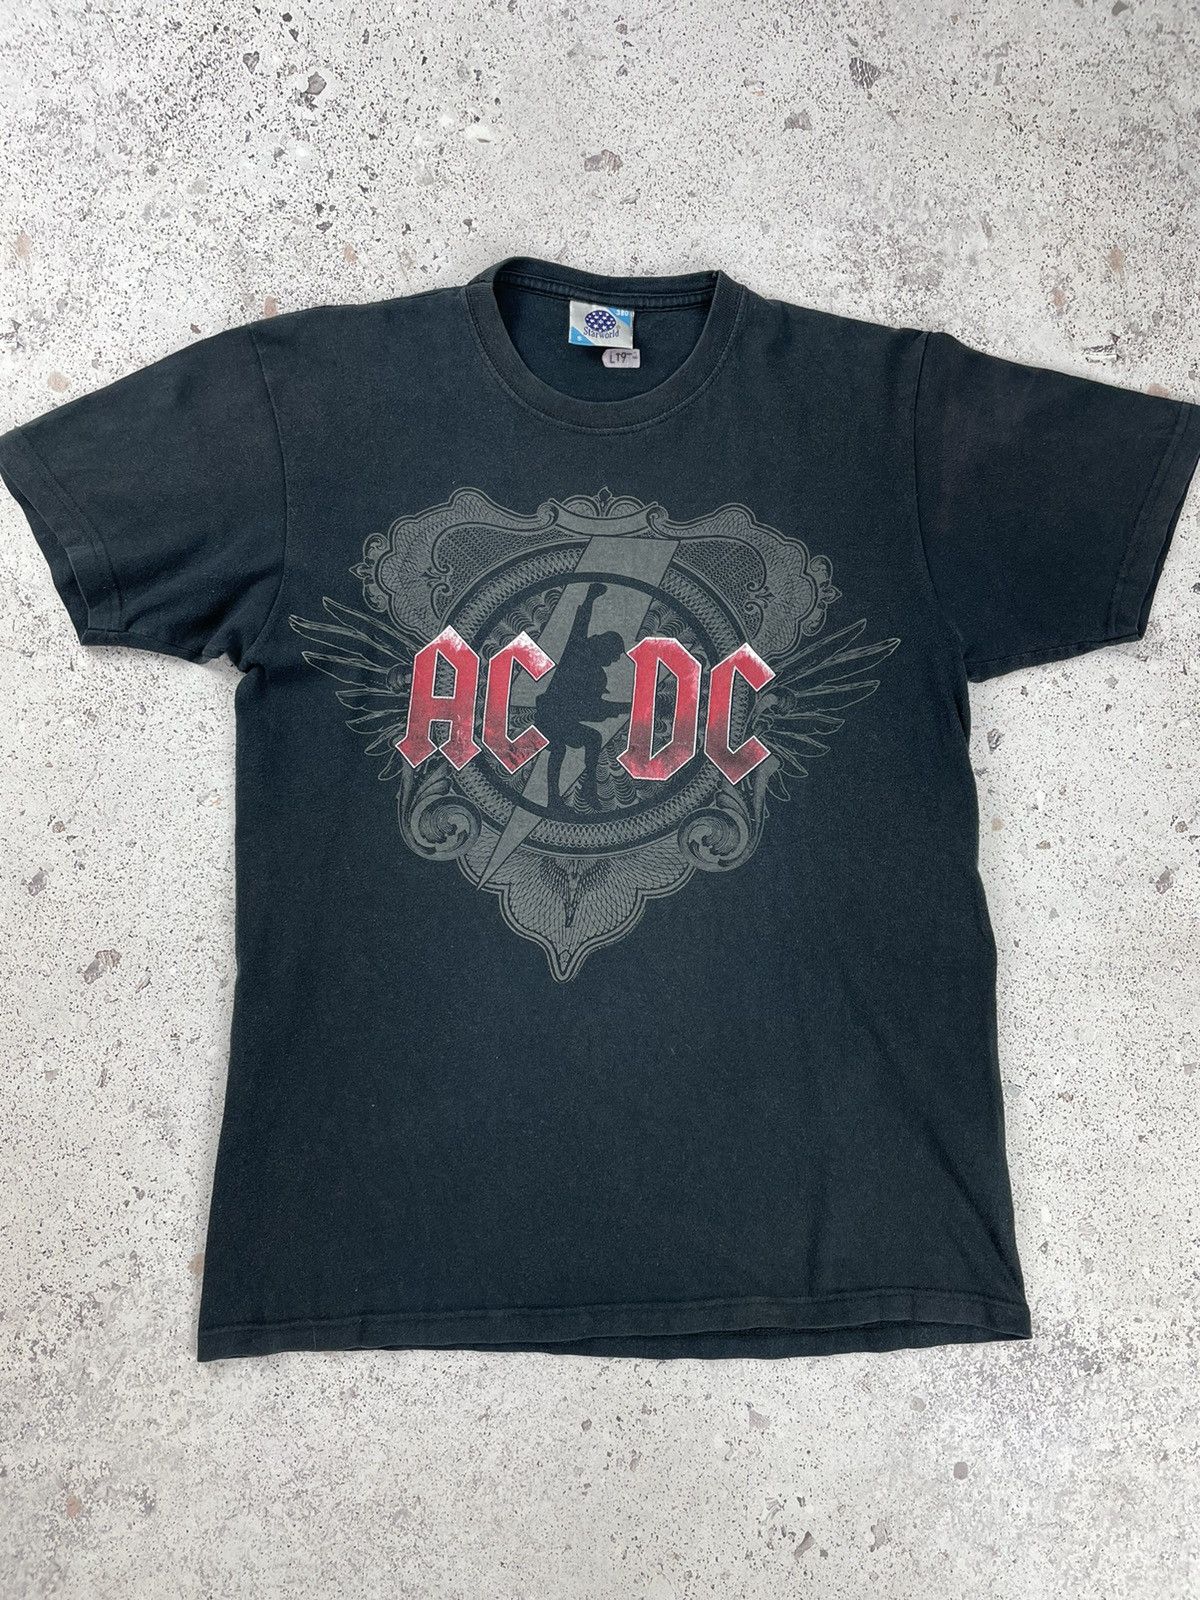 Vintage Vintage Ac/Dc Rock Band tee t-shirt Size US S / EU 44-46 / 1 - 1 Preview